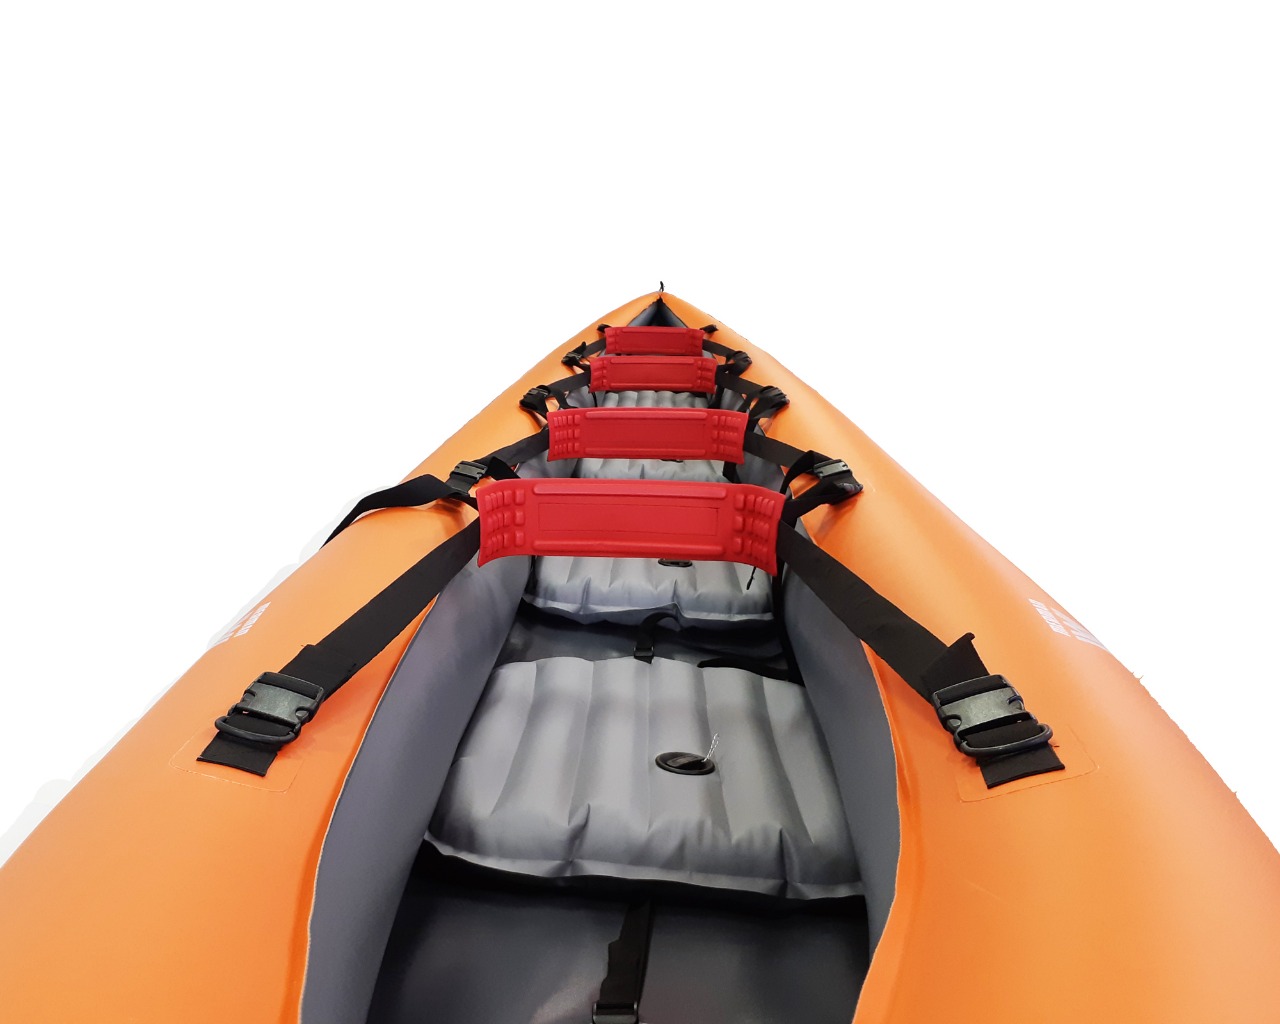 Merman Life 640/4 четырёхместная байдарка, цвет оранжевый